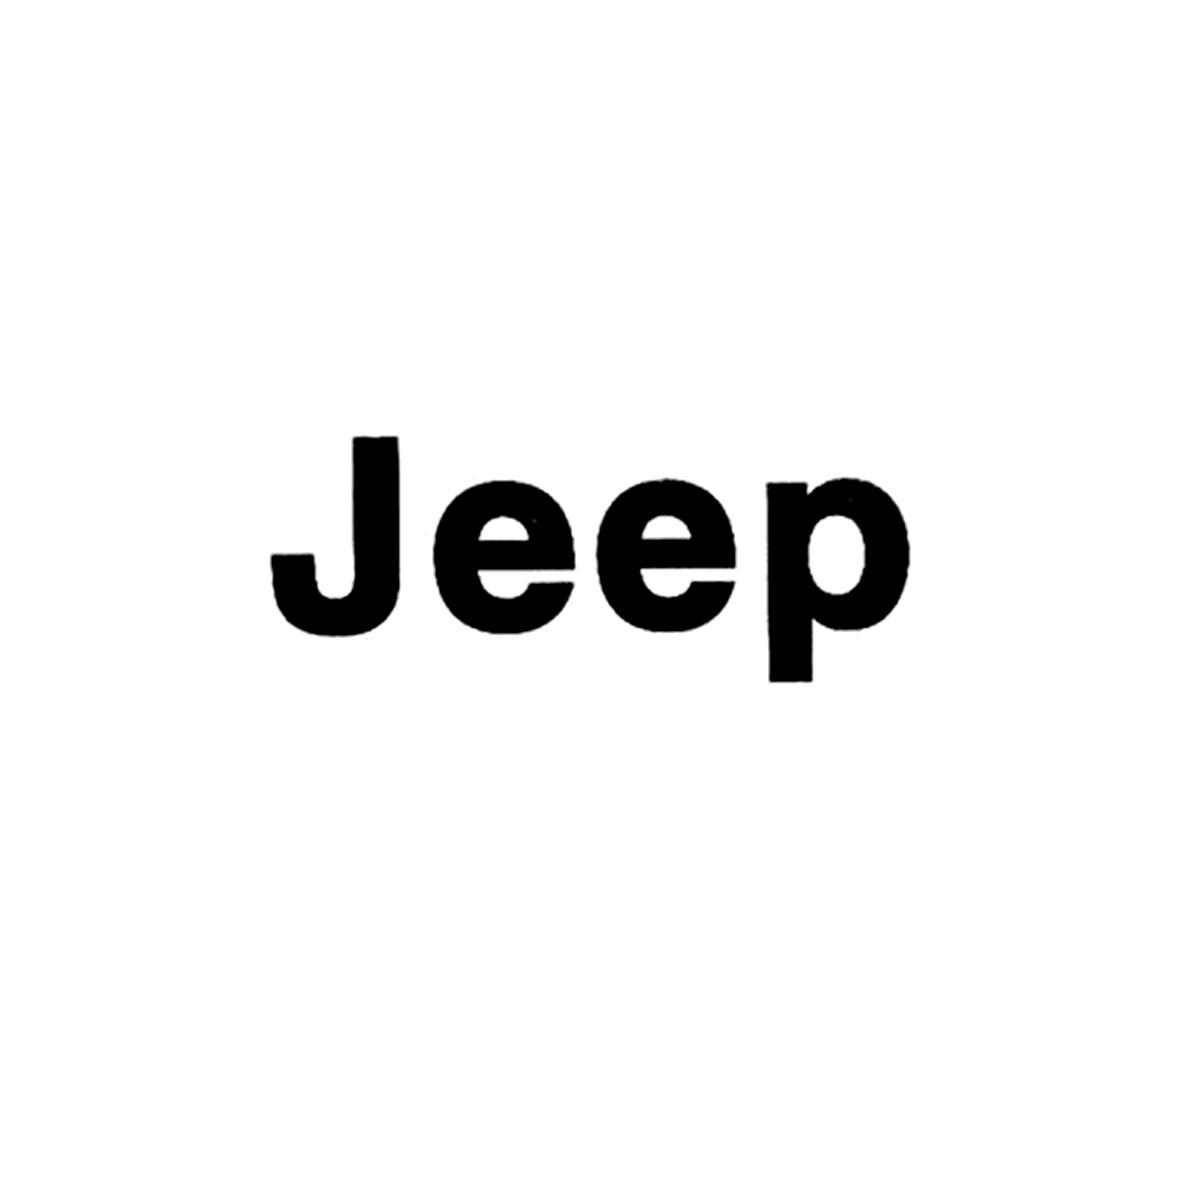 jeep注册商标查询信息 - 商标分类信息 - 天眼查